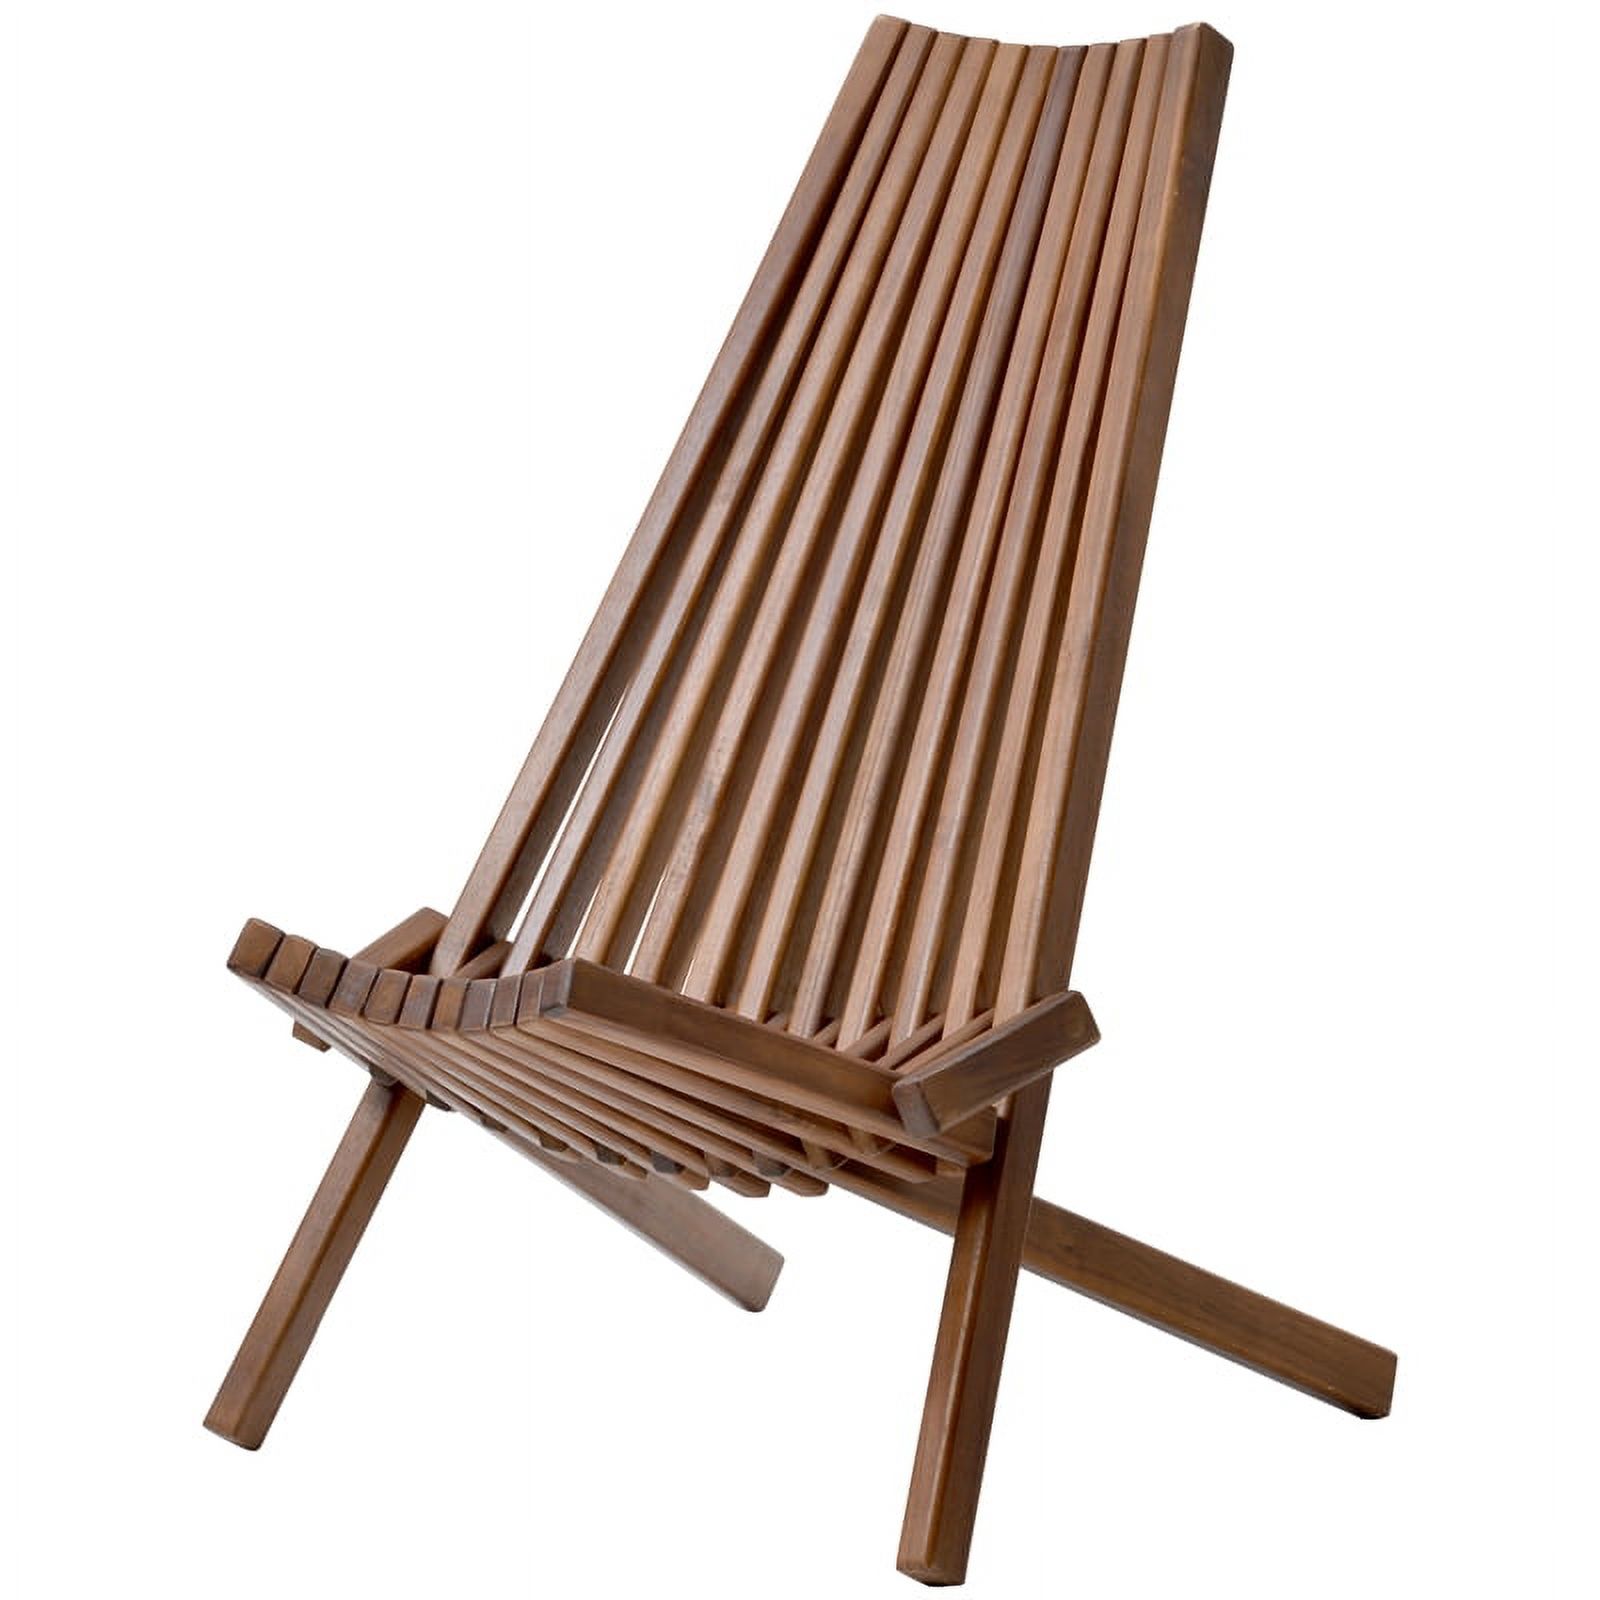 CRO Decor Folding Garden Chairs Acacia Wood Lounge Chair Yard Balcony Furniture - image 2 of 10